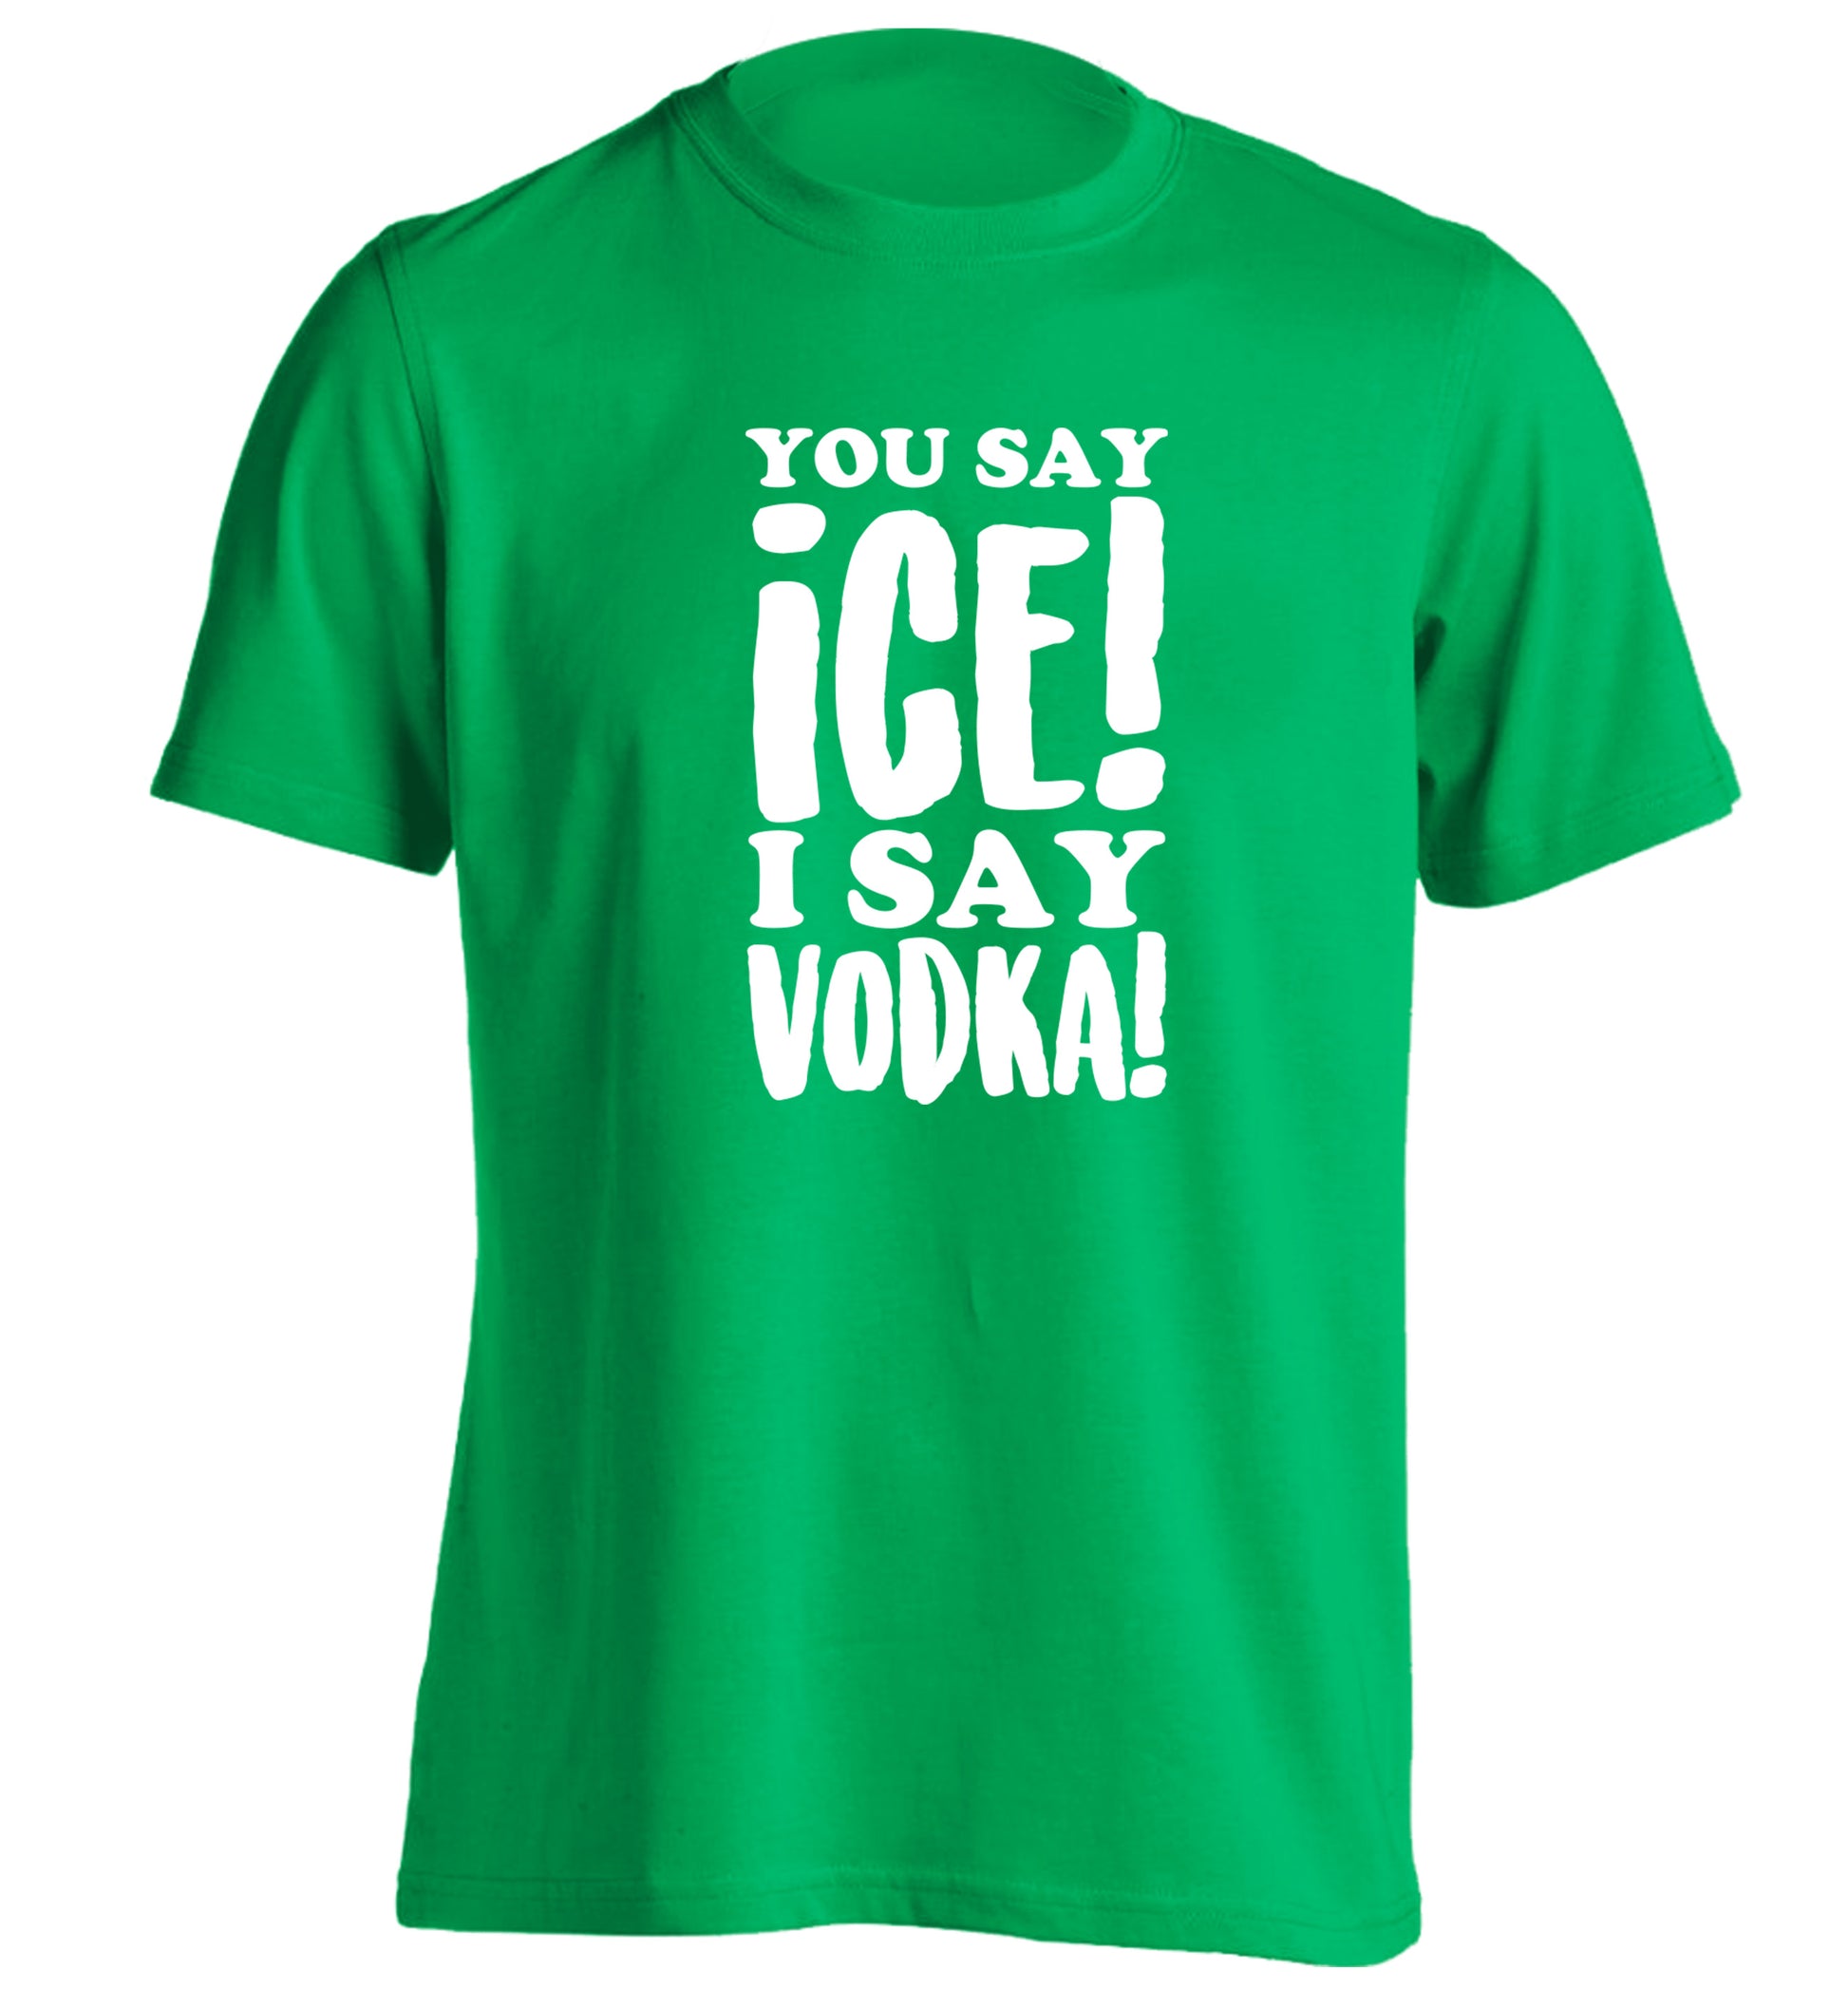 You say ice I say vodka! adults unisex green Tshirt 2XL